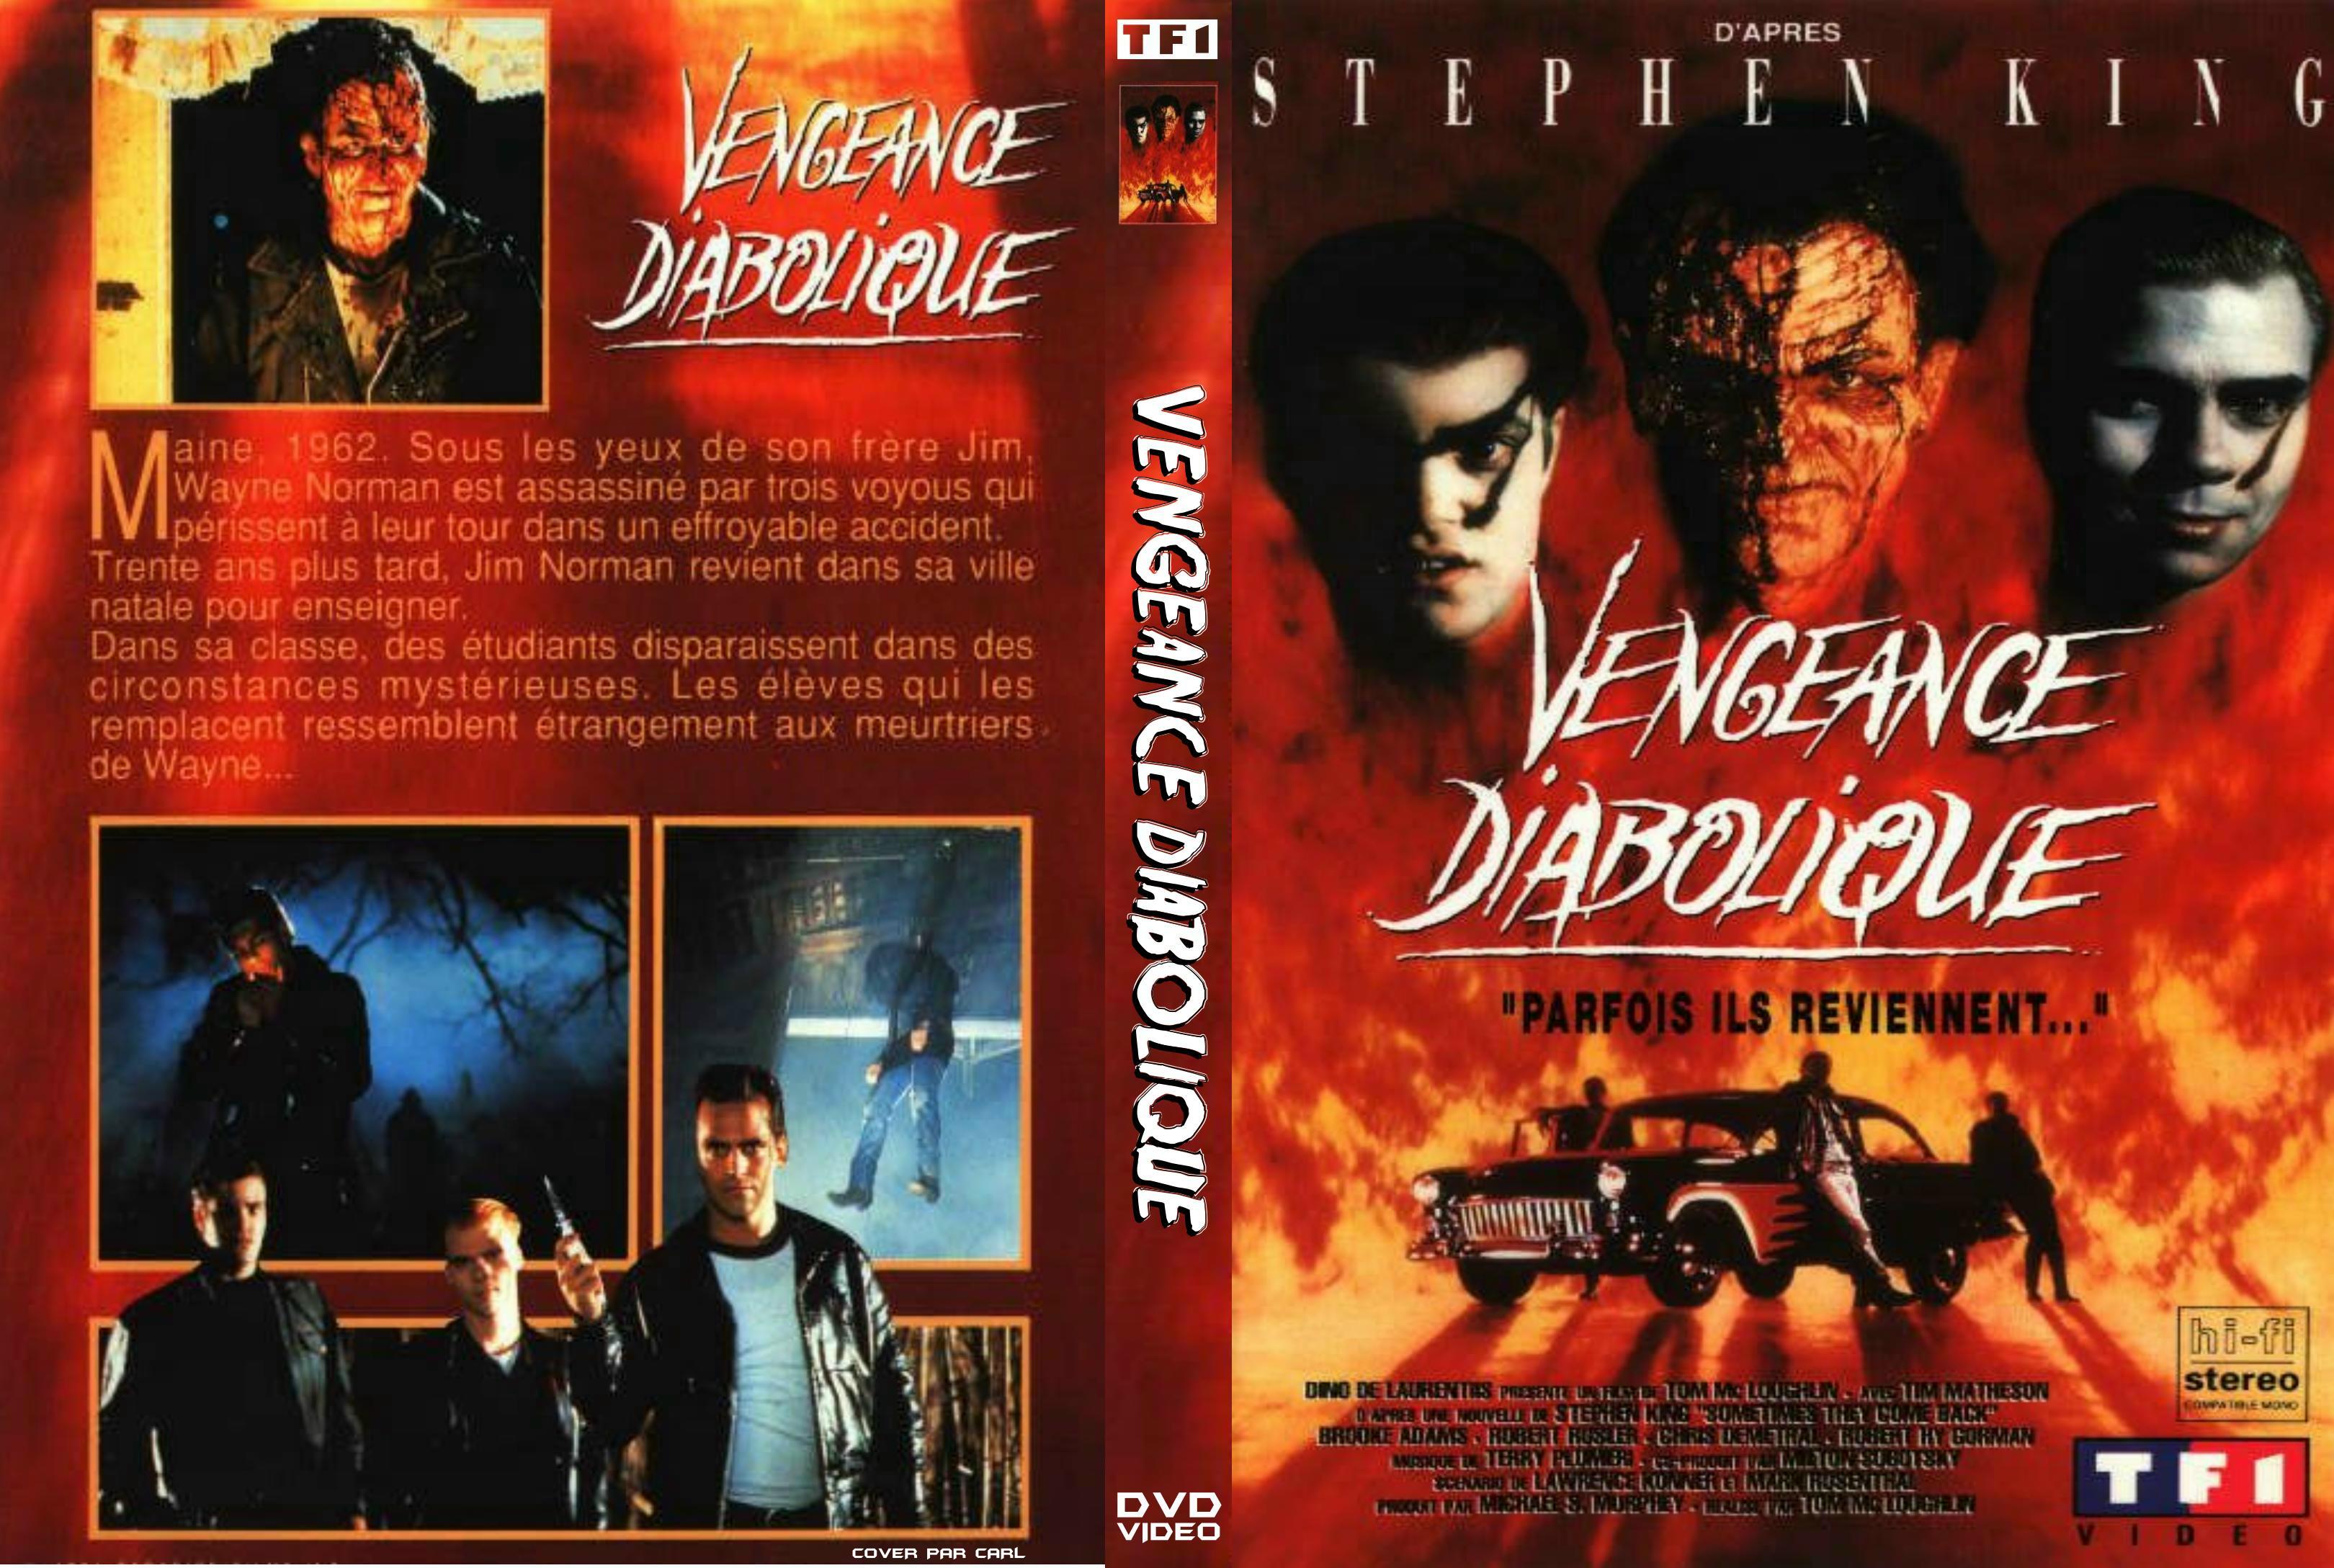 Jaquette DVD Vengeance diabolique custom